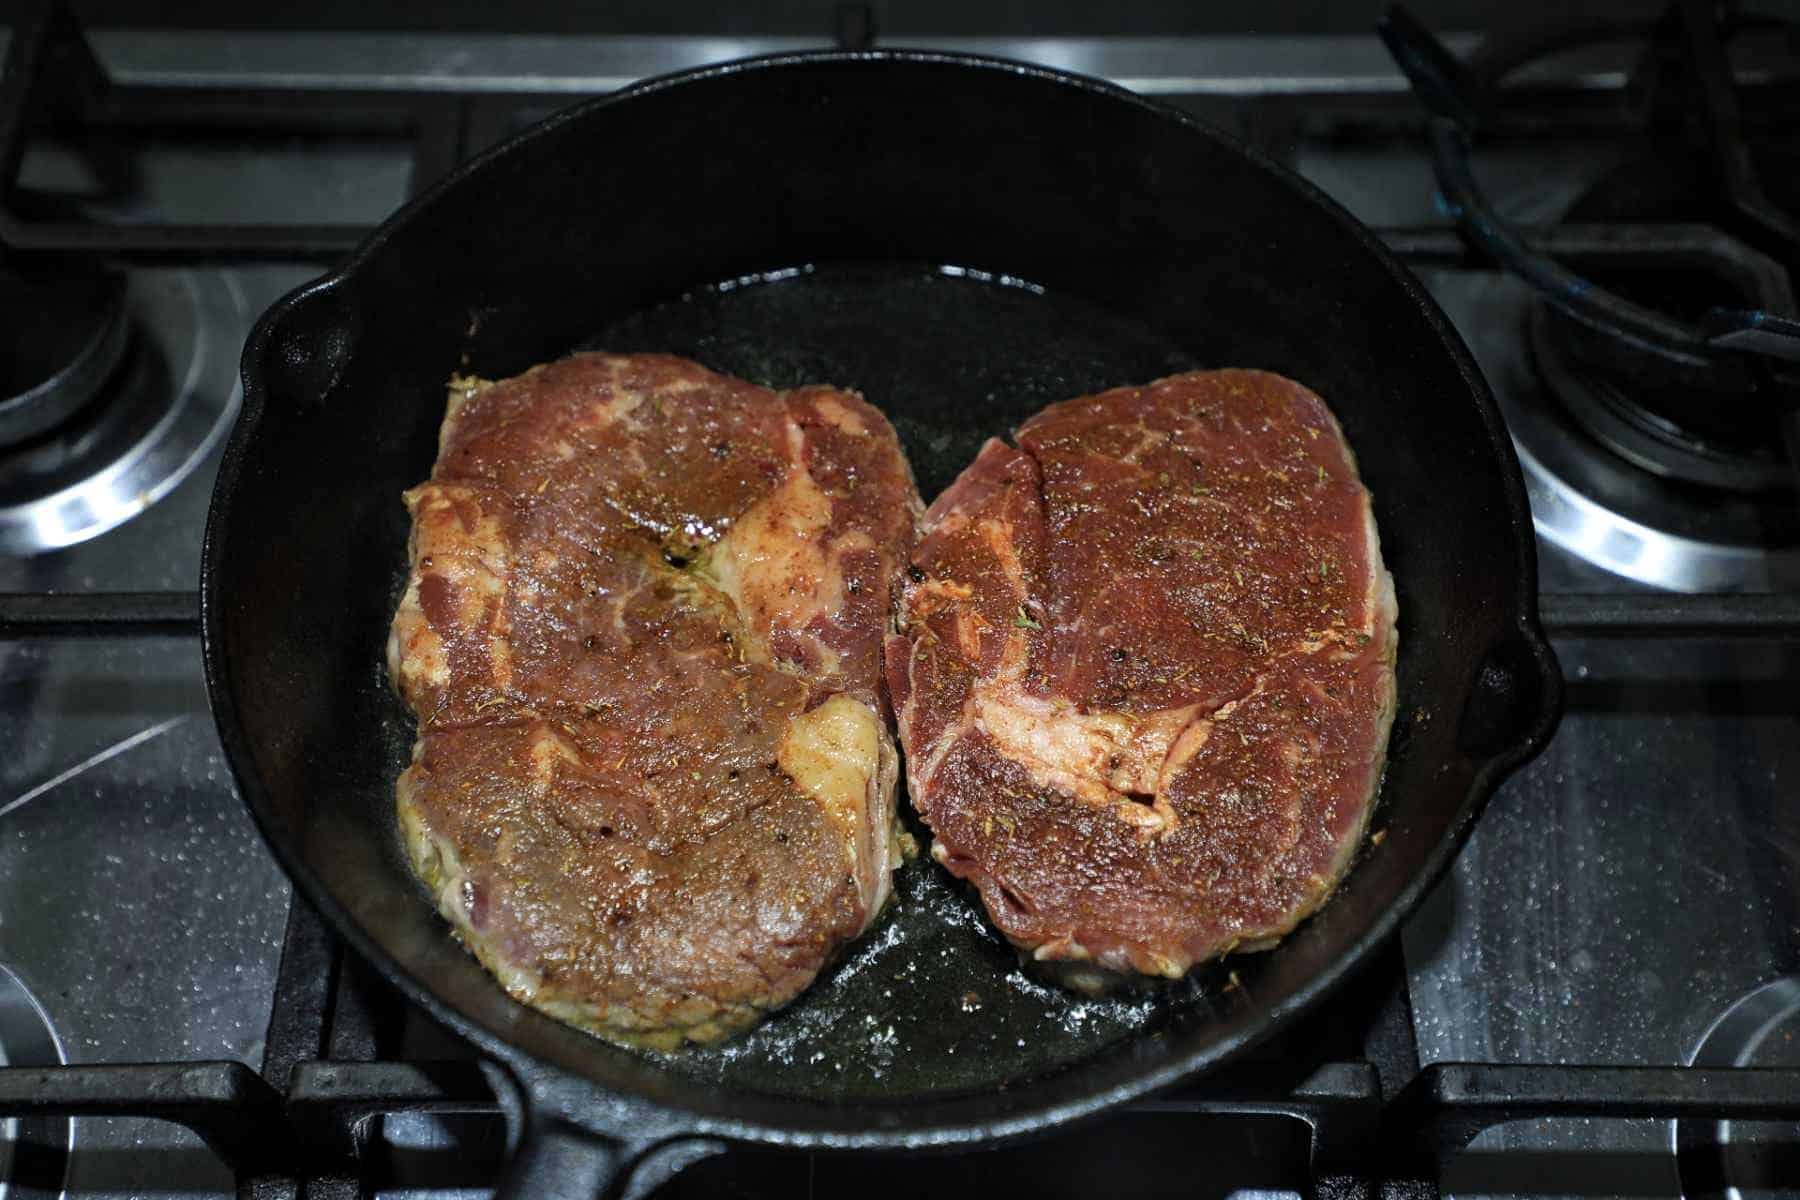 pan frying 2 steaks in a cast iron skillet.